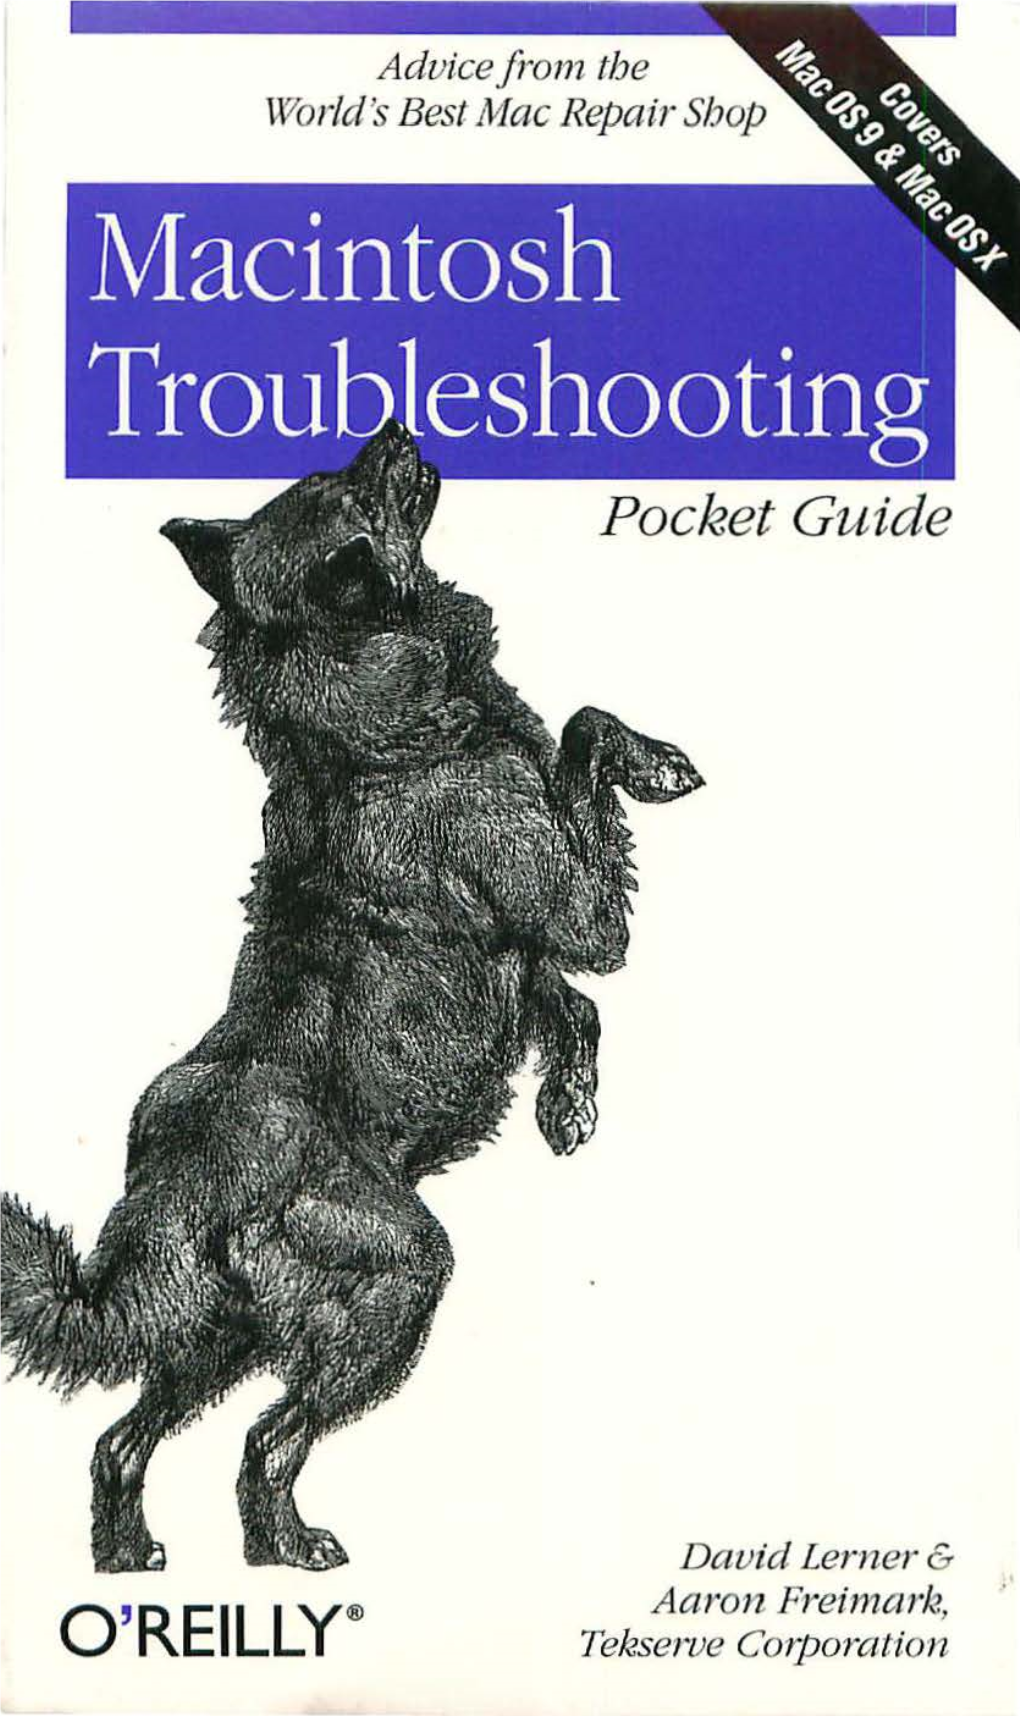 Macintosh Troubleshooting Pocket Guide 2003.Pdf